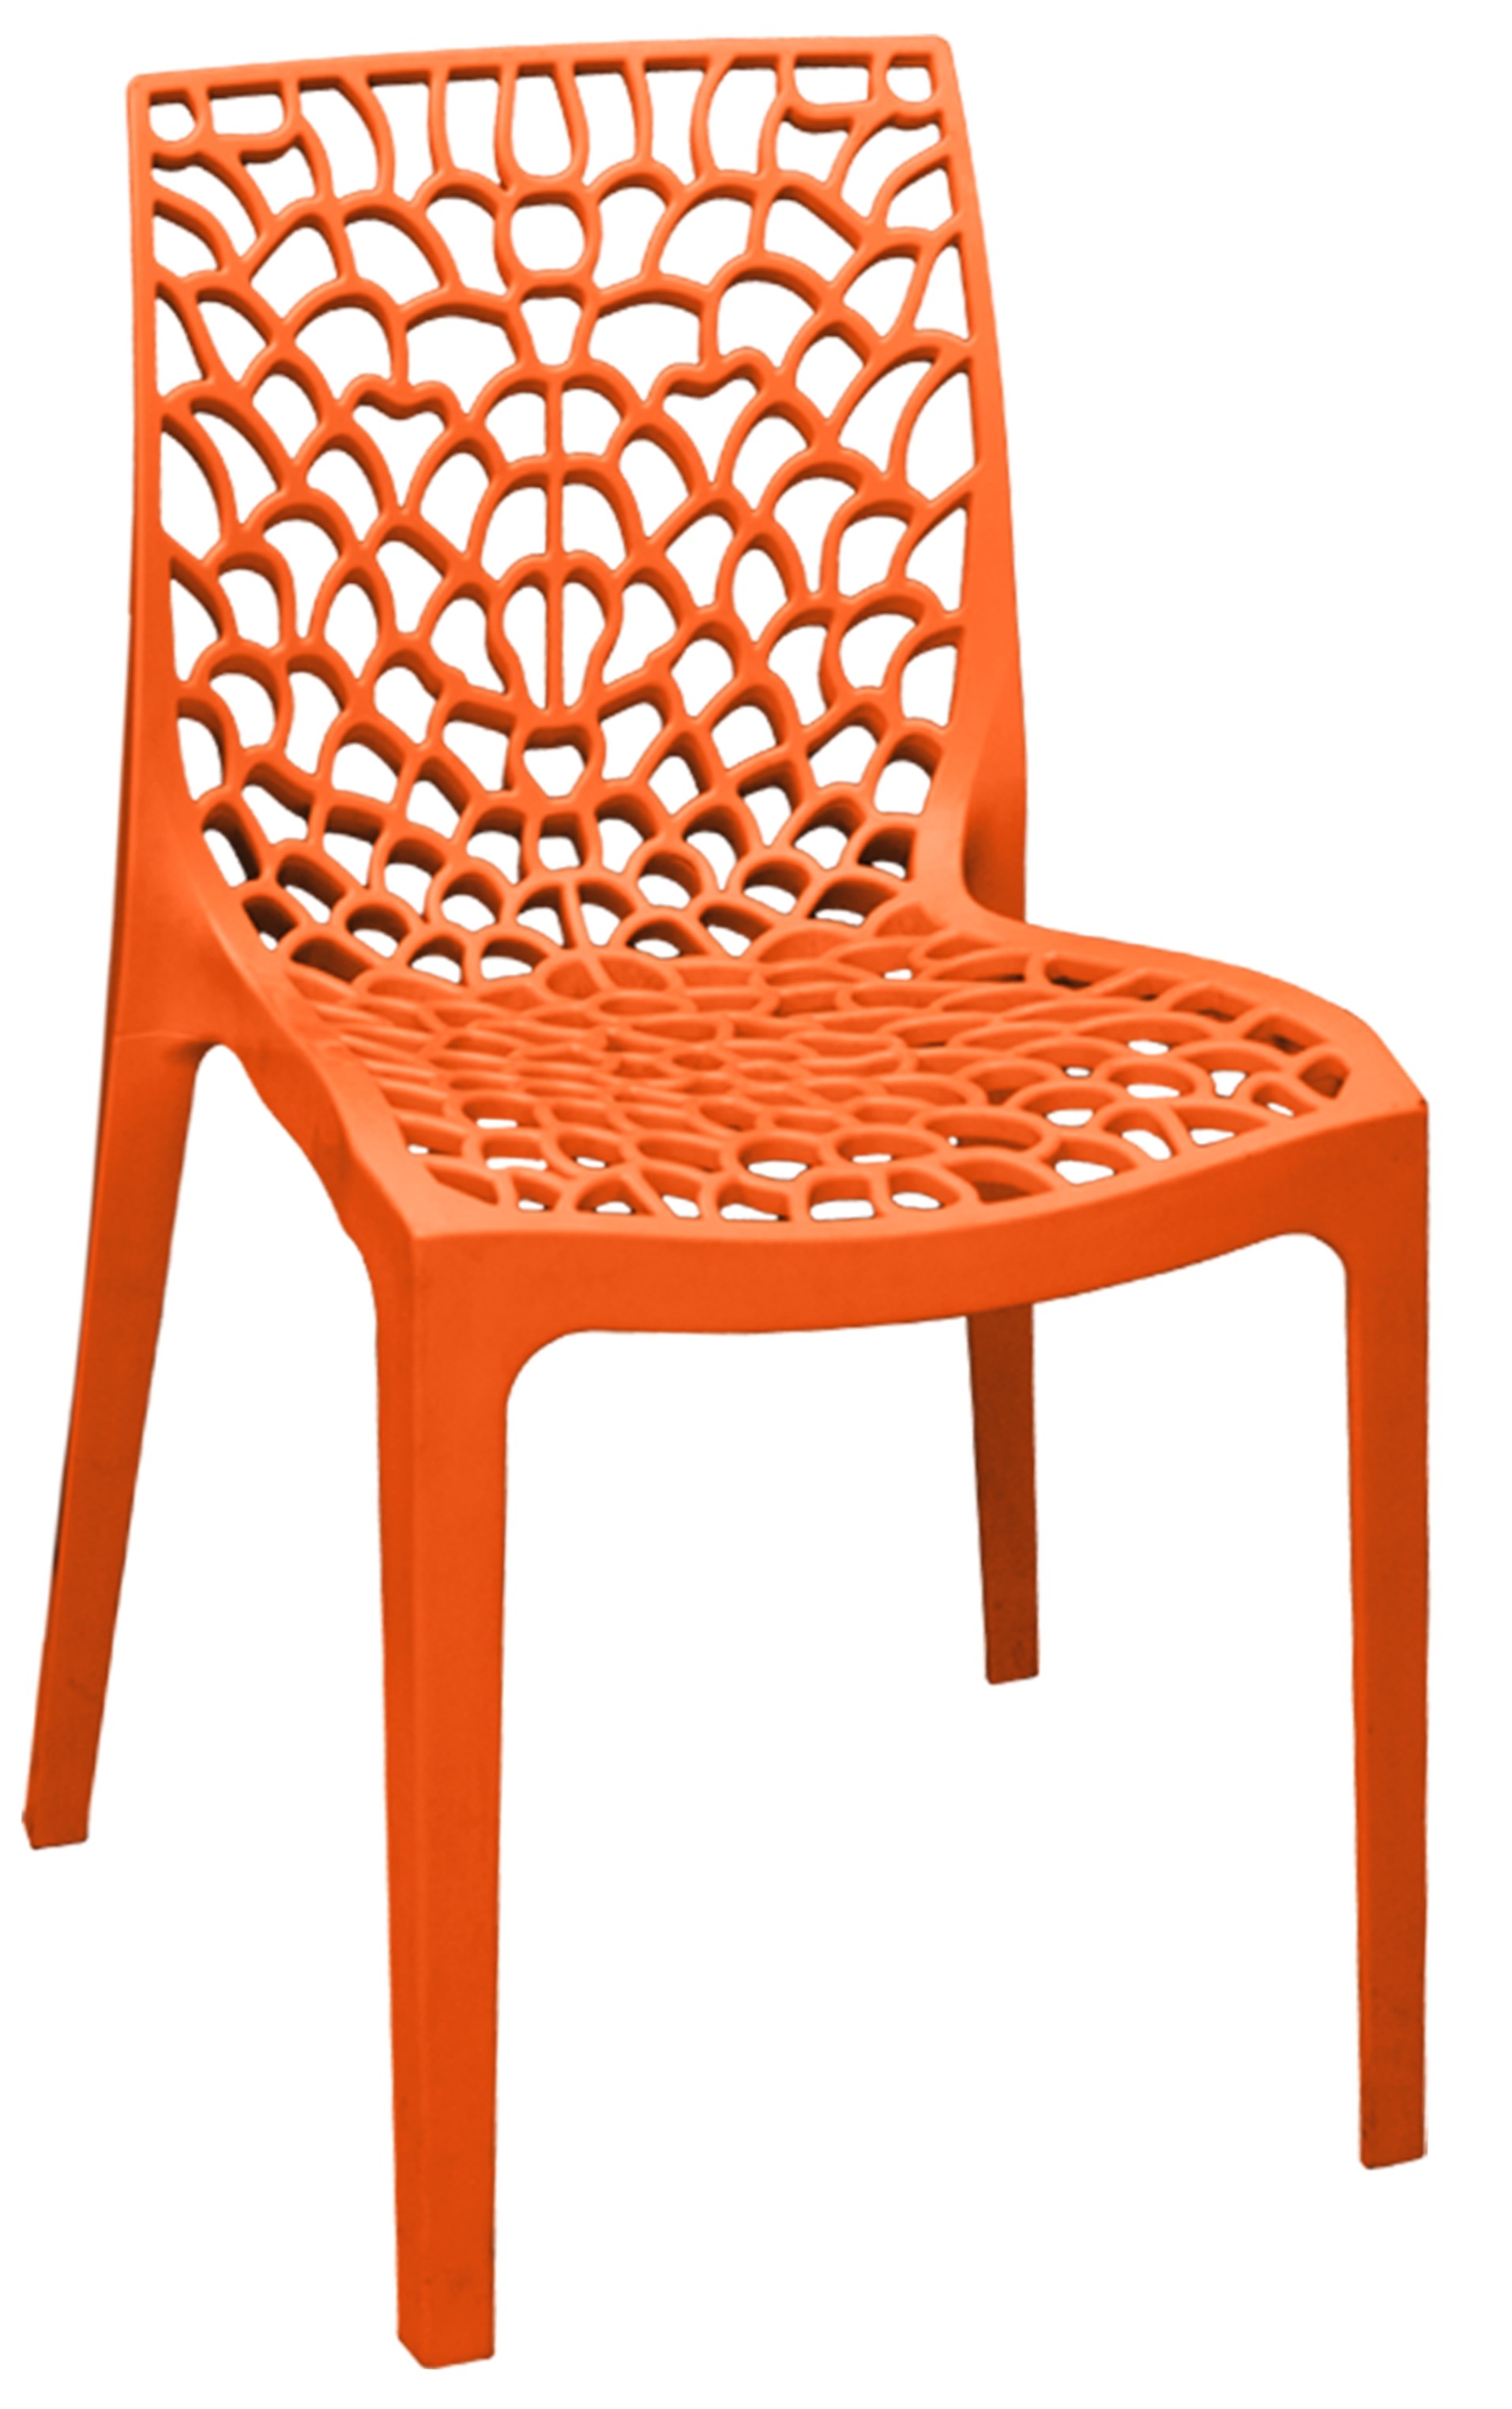 Karissa Plastic Resin Chair in Orange-image